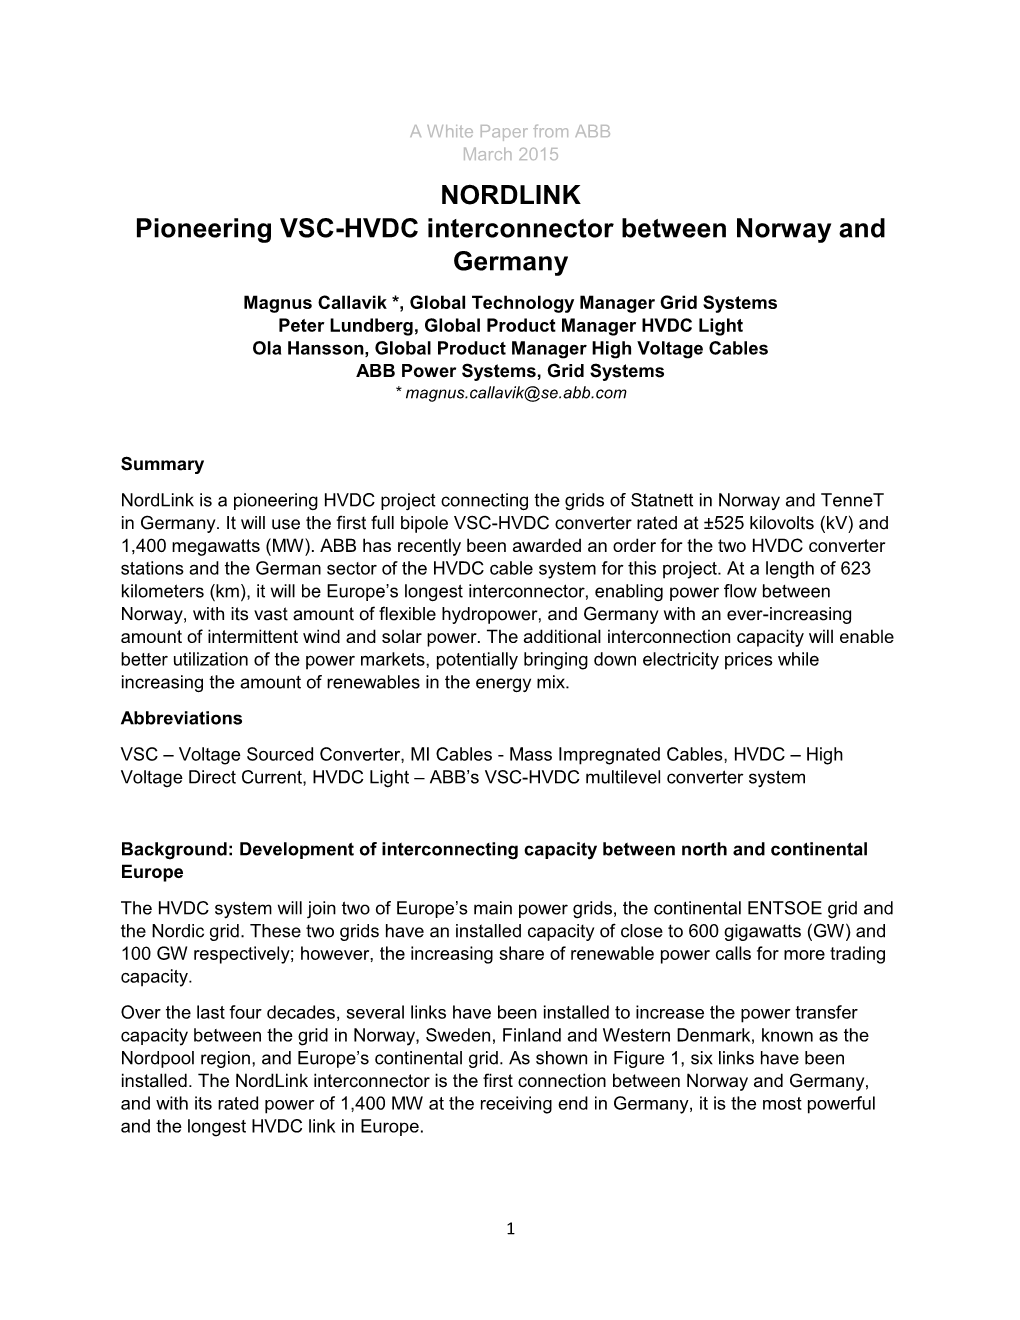 NORDLINK Pioneering VSC-HVDC Interconnector Between Norway and Germany